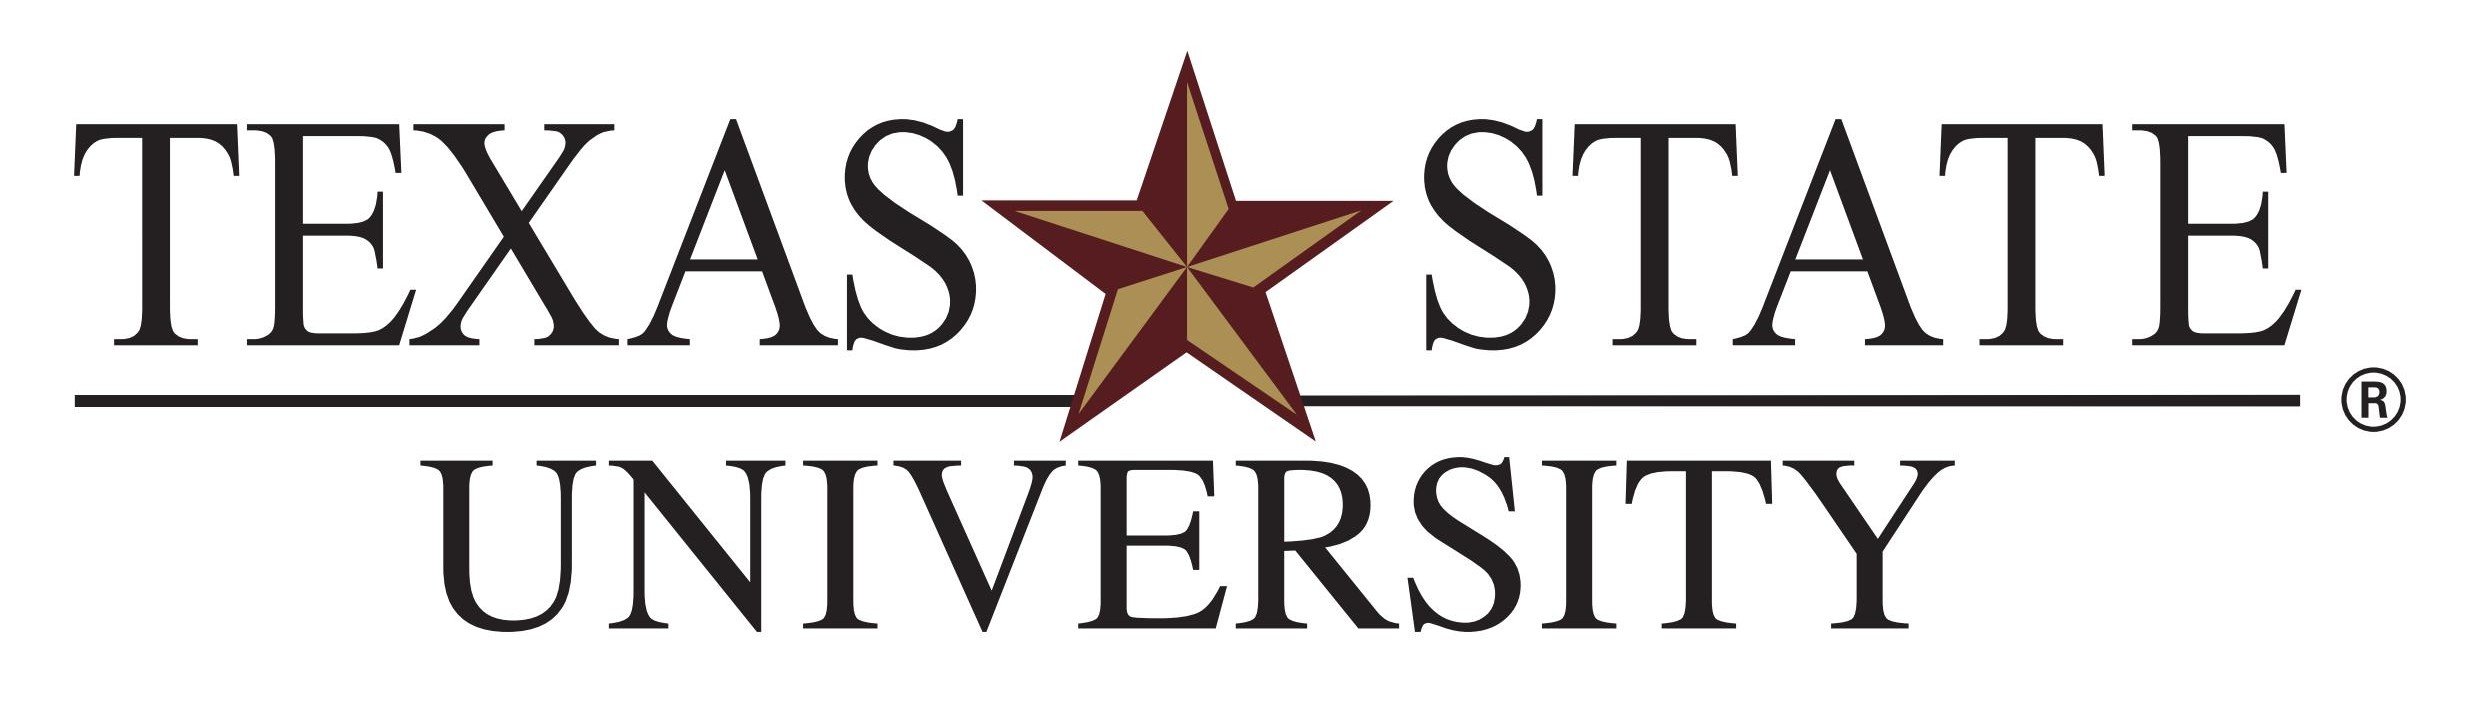 texas_state_university_logo1.jpeg